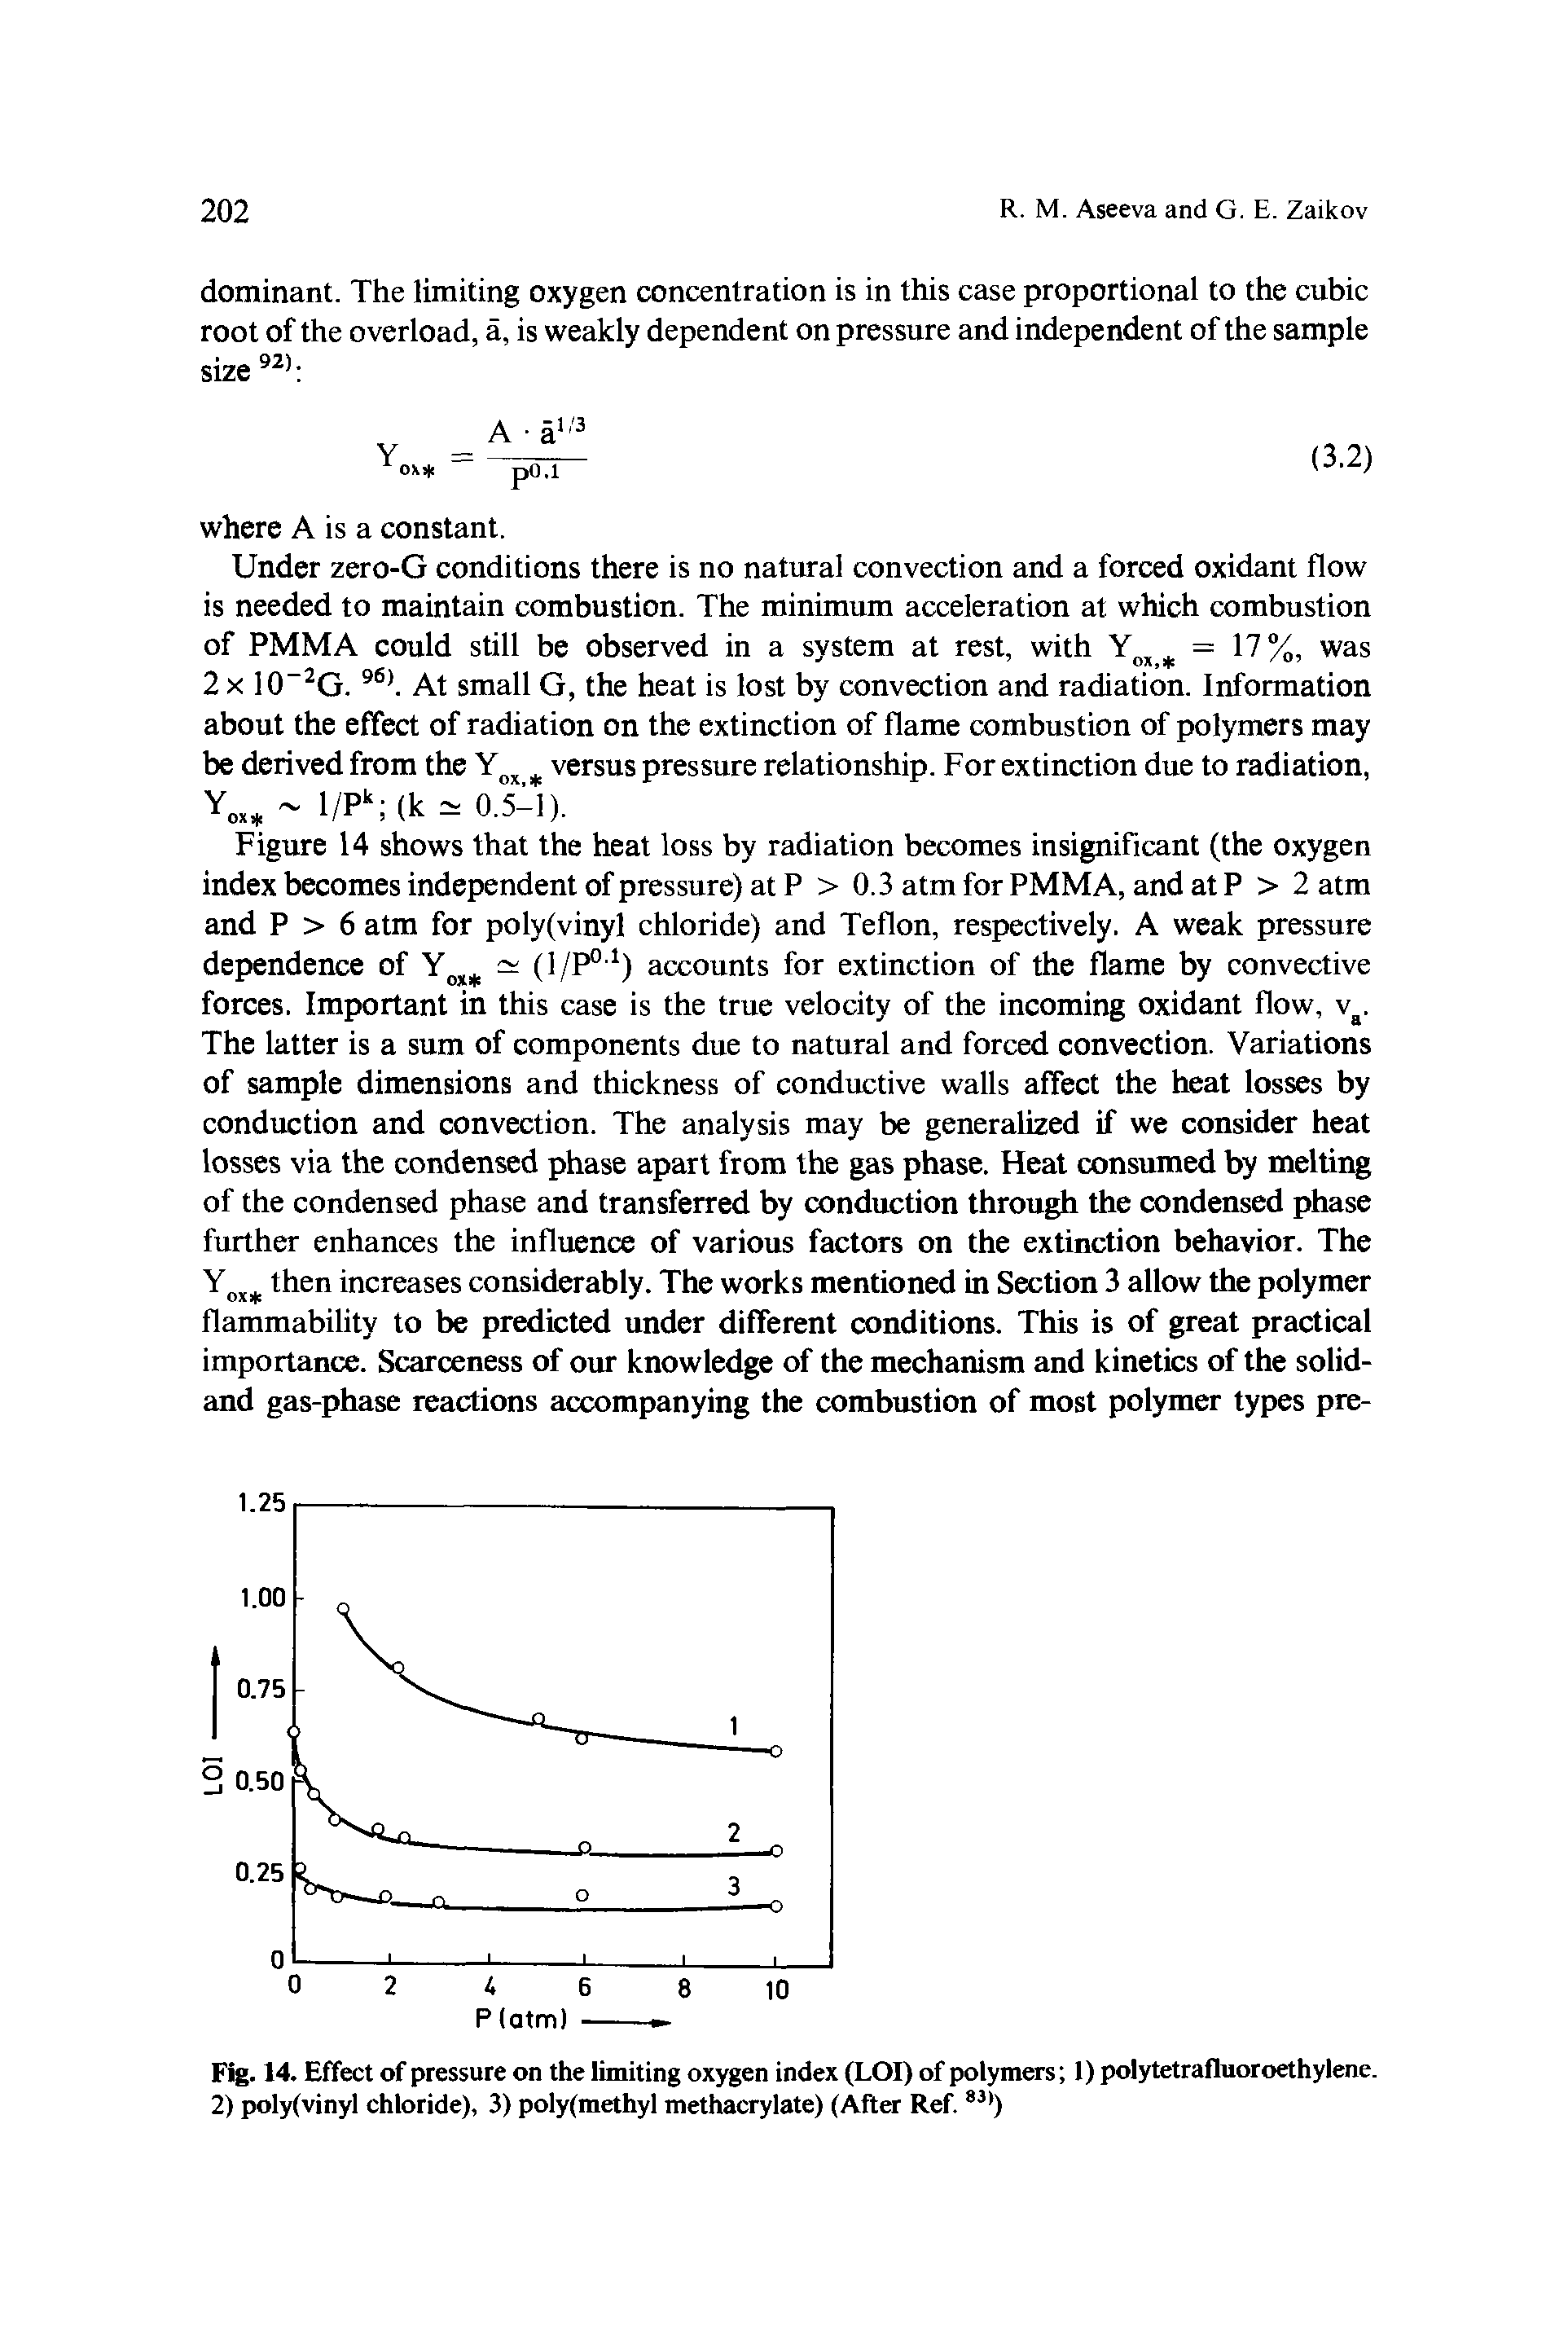 Fig. 14. Effect of pressure on the limiting oxygen index (LOI) of polymers 1) polytetrafluoroethylene. 2) polyfvinyl chloride), 3) polyfmethyl methacrylate) (After Ref. 3>)...